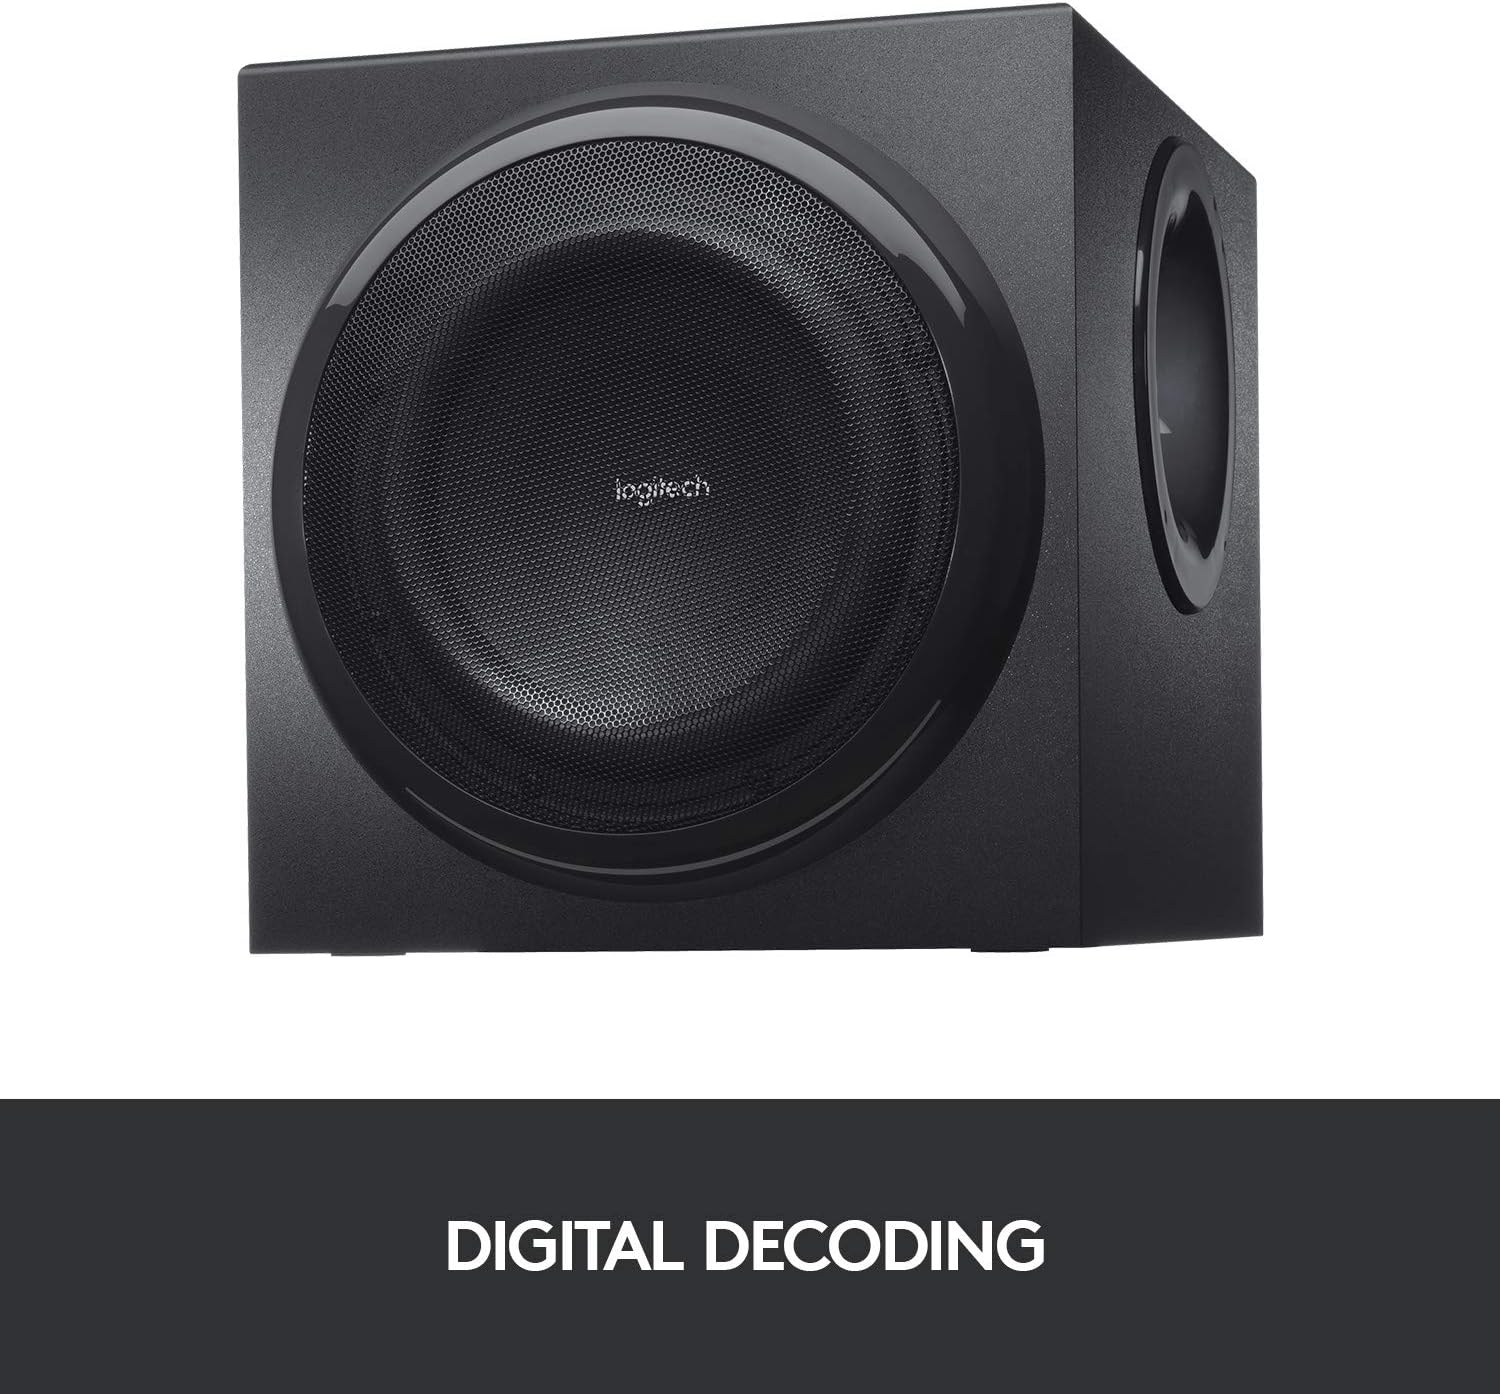 Logitech 980-000468 Z906 5.1 Surround Sound Speaker System